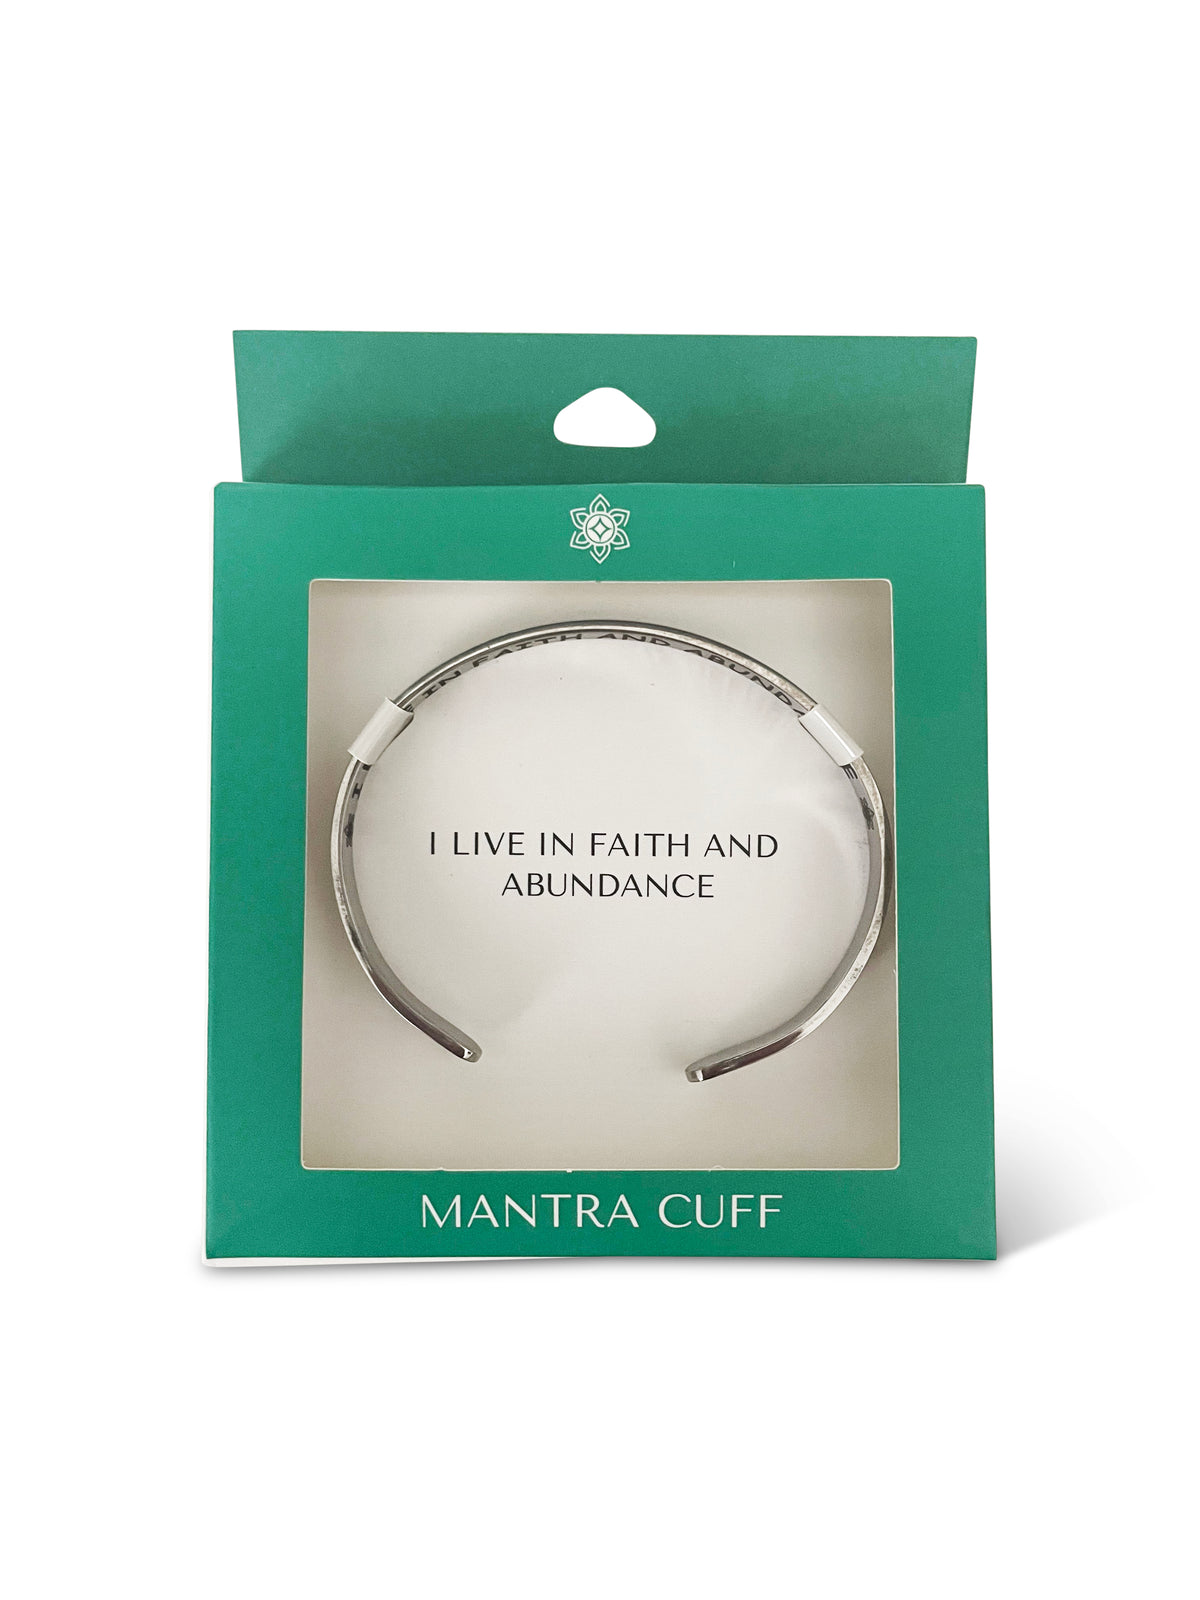 I Live in Faith and Abundance (Mantra Cuff)